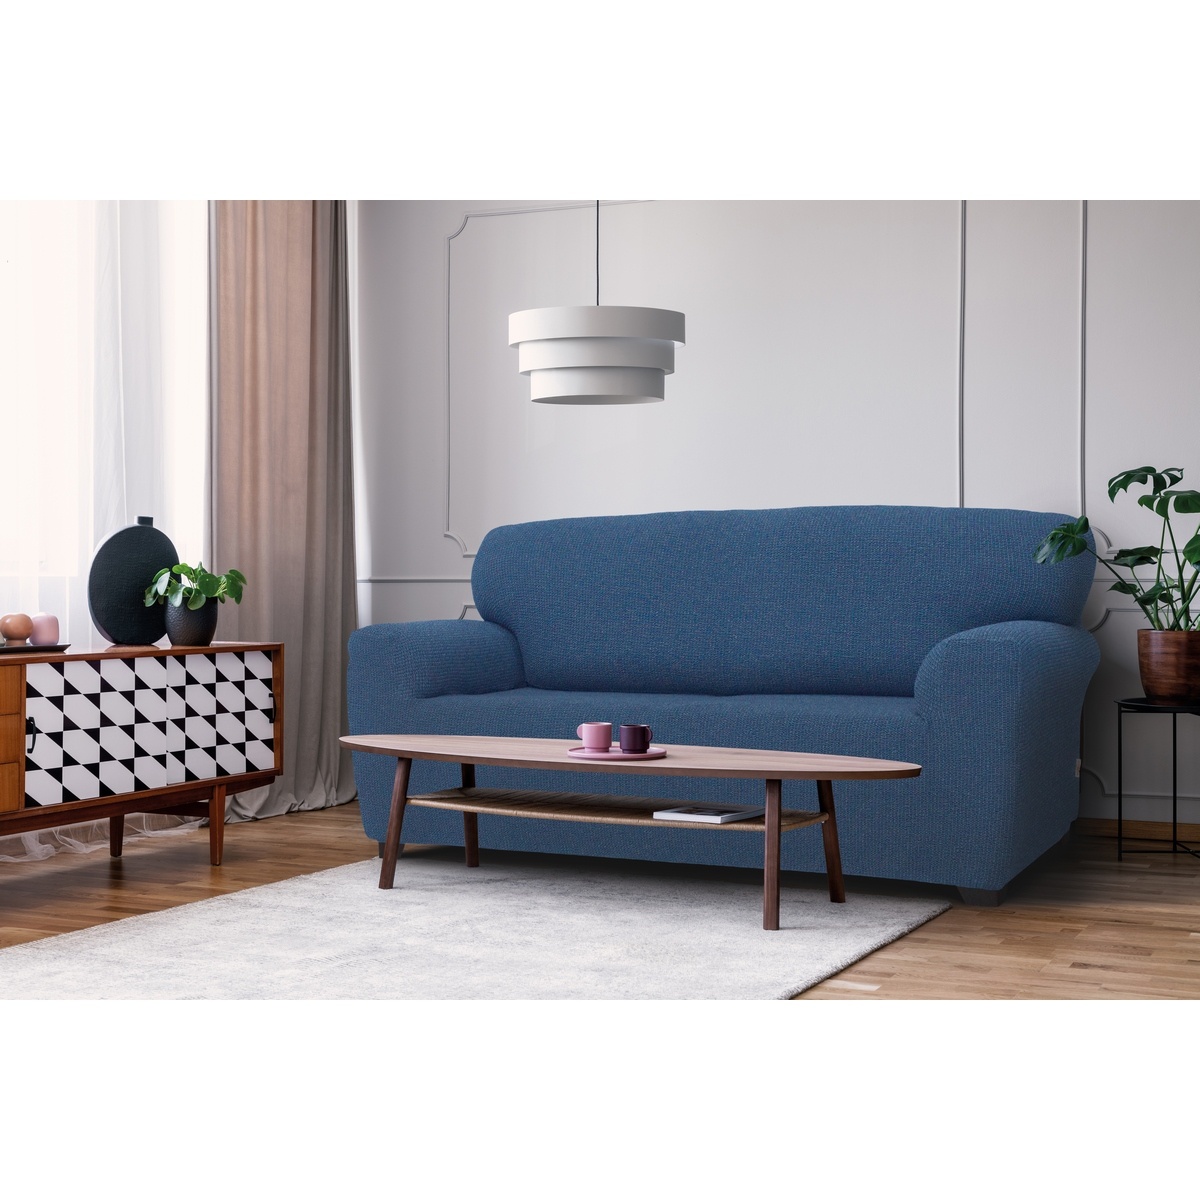 Multielasztikus kanapéhuzat kék, 220 - 260 cm, 220 - 260 cm